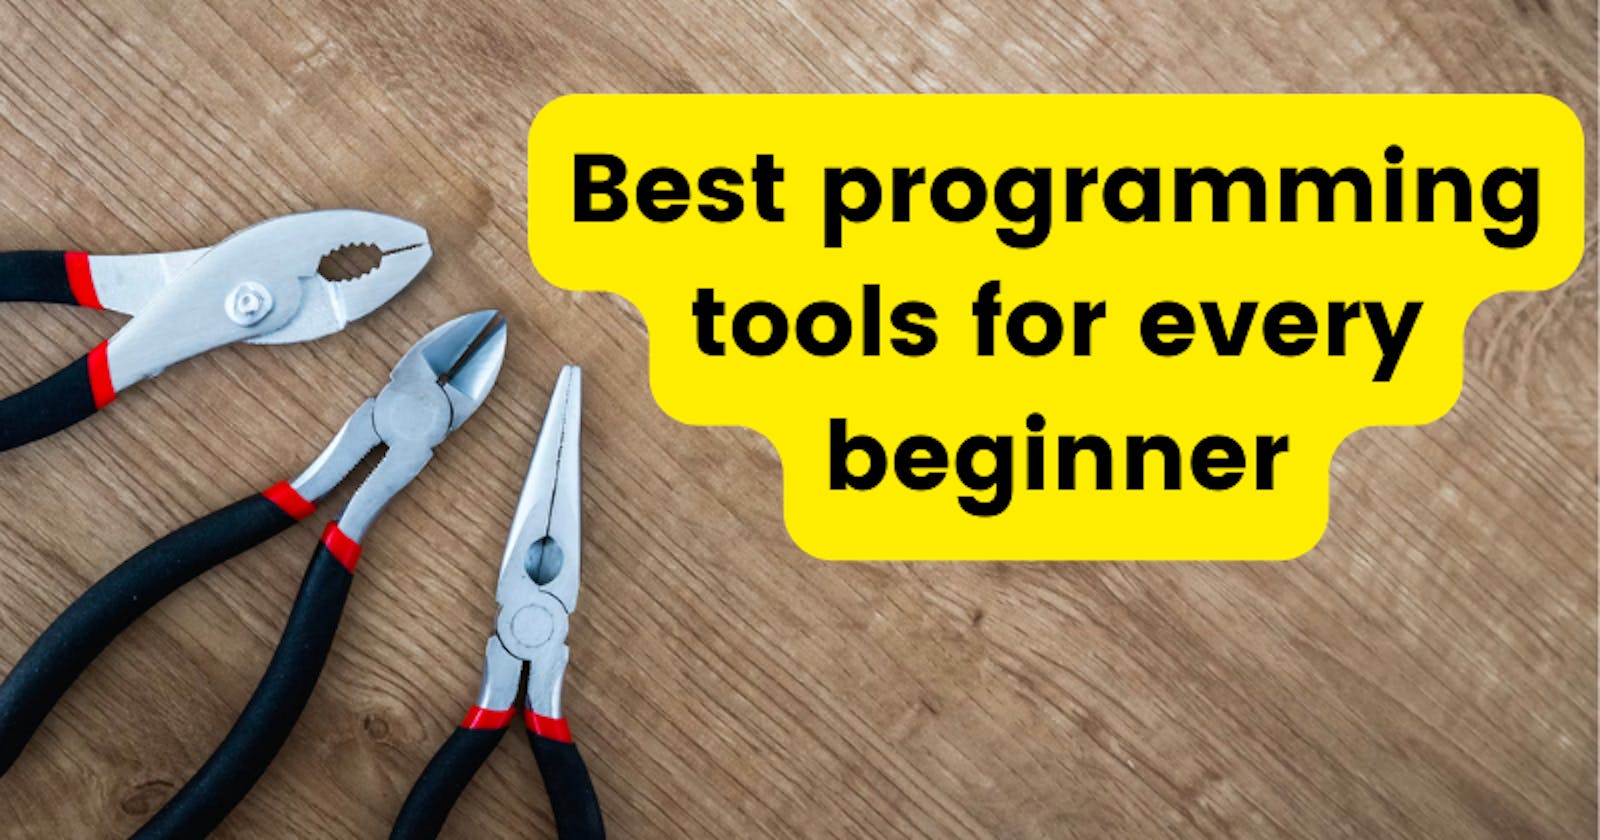 Best programming tools for every beginner